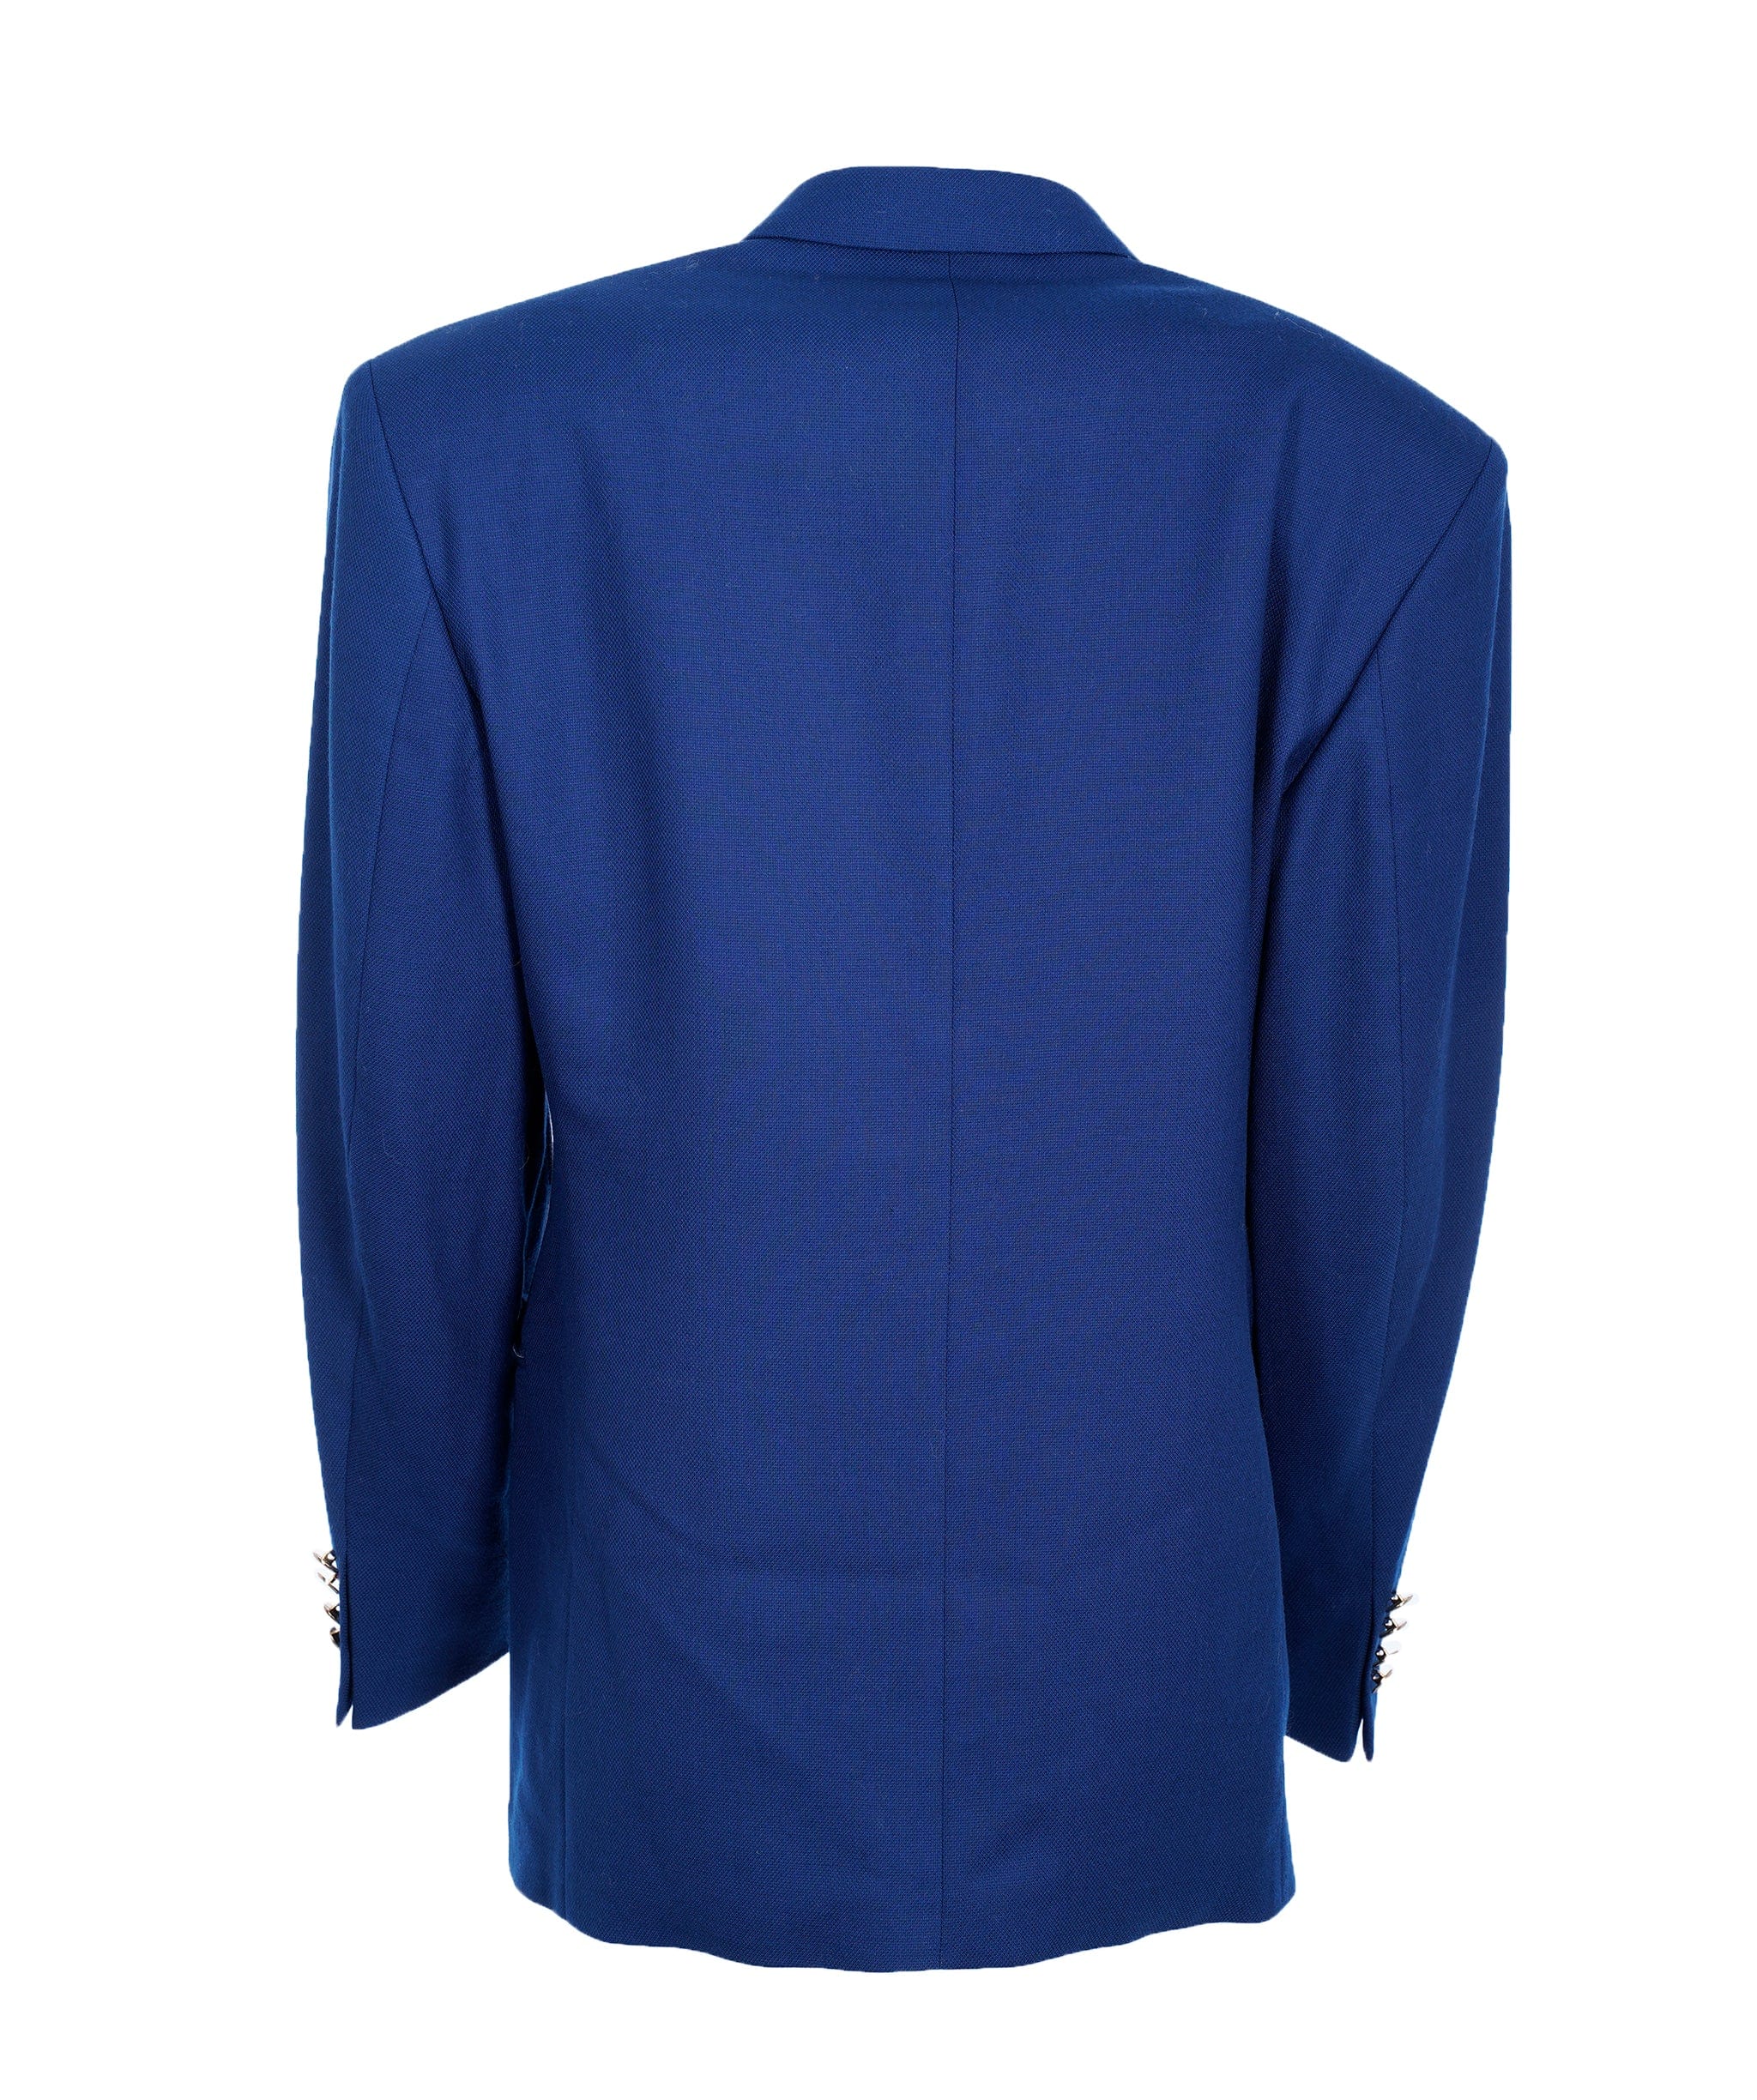 Yves Saint Laurent YSL vintage blue blazer with gold buttons - AJC0500